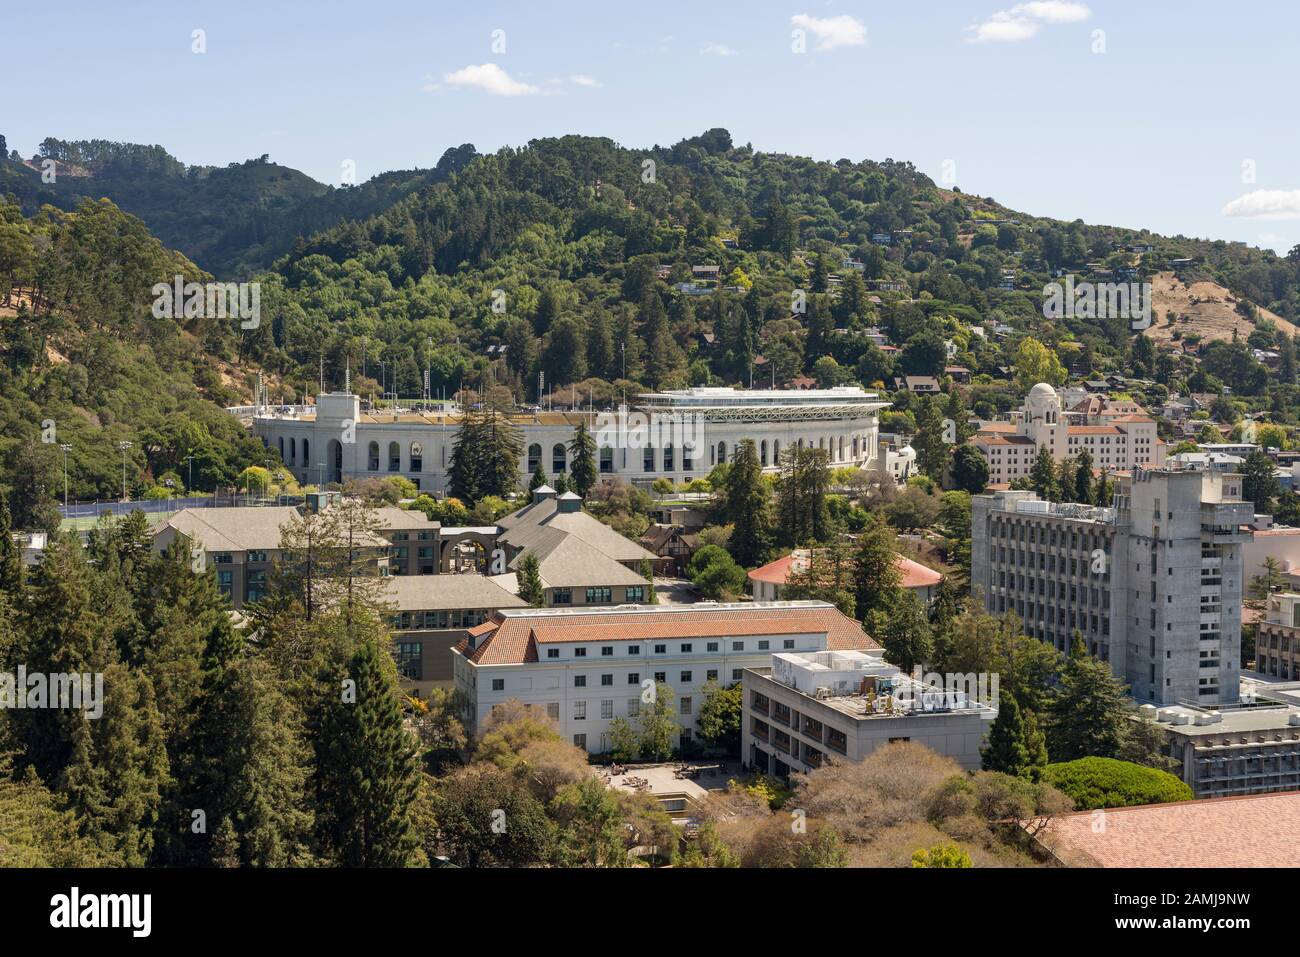 The University of California, Berkeley (UC Berkeley or Cal) is a public research university in Berkeley, California, USA. Stock Photo